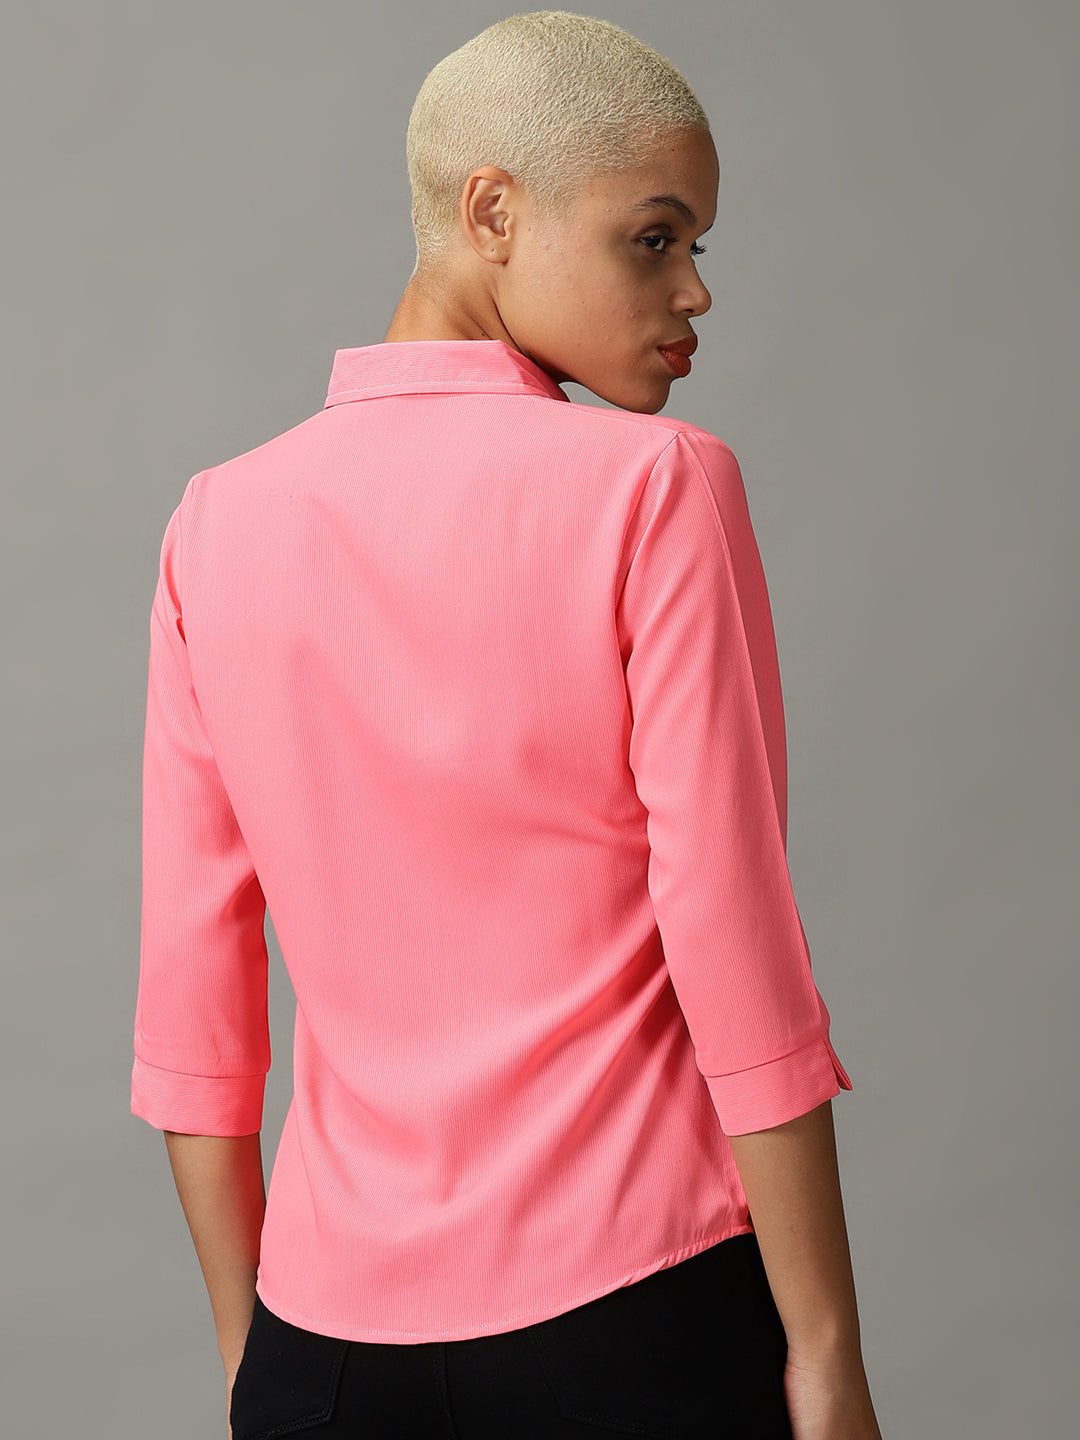 Women's Pink Solid Shirt